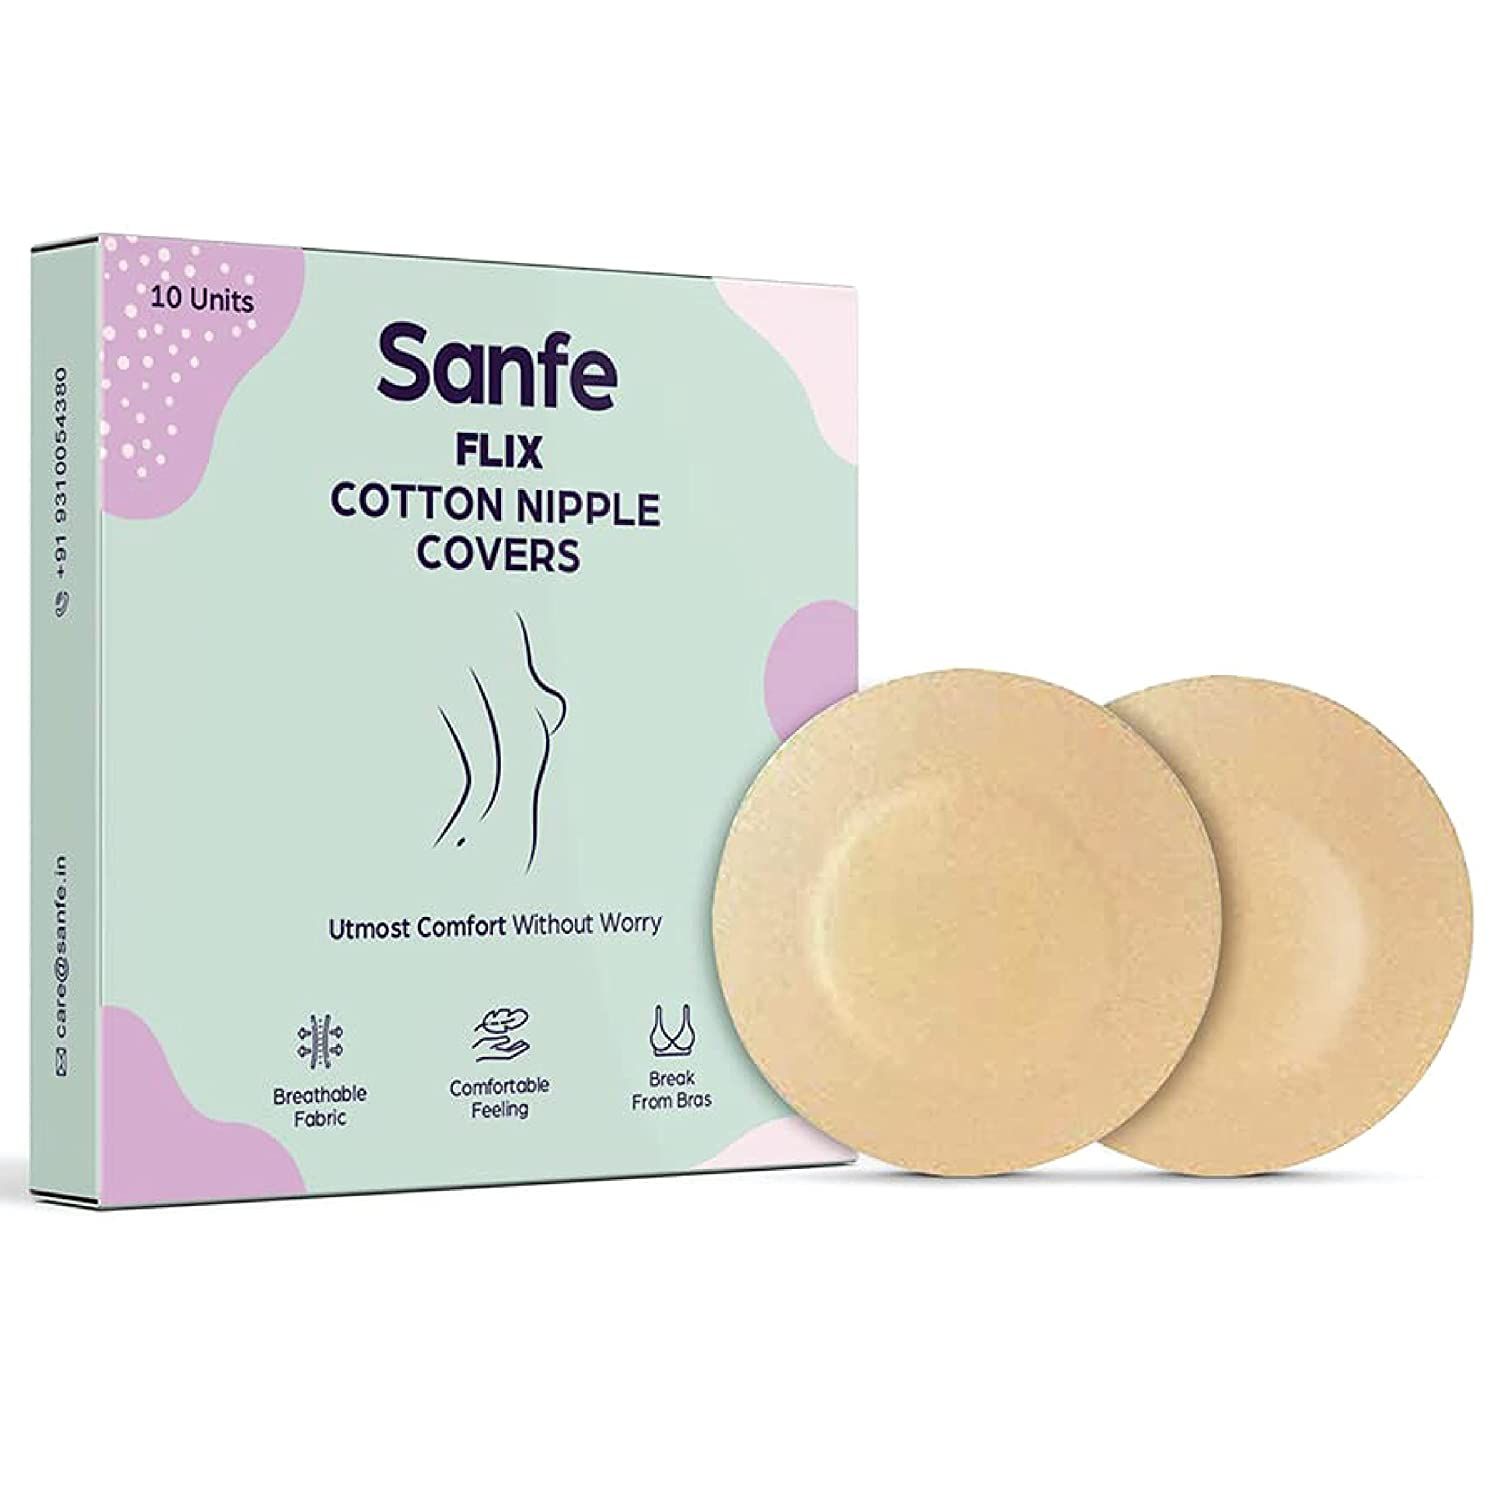 Sanfe Flix Cotton Nipple Covers, 10 Breathable Nipple Pasties, No